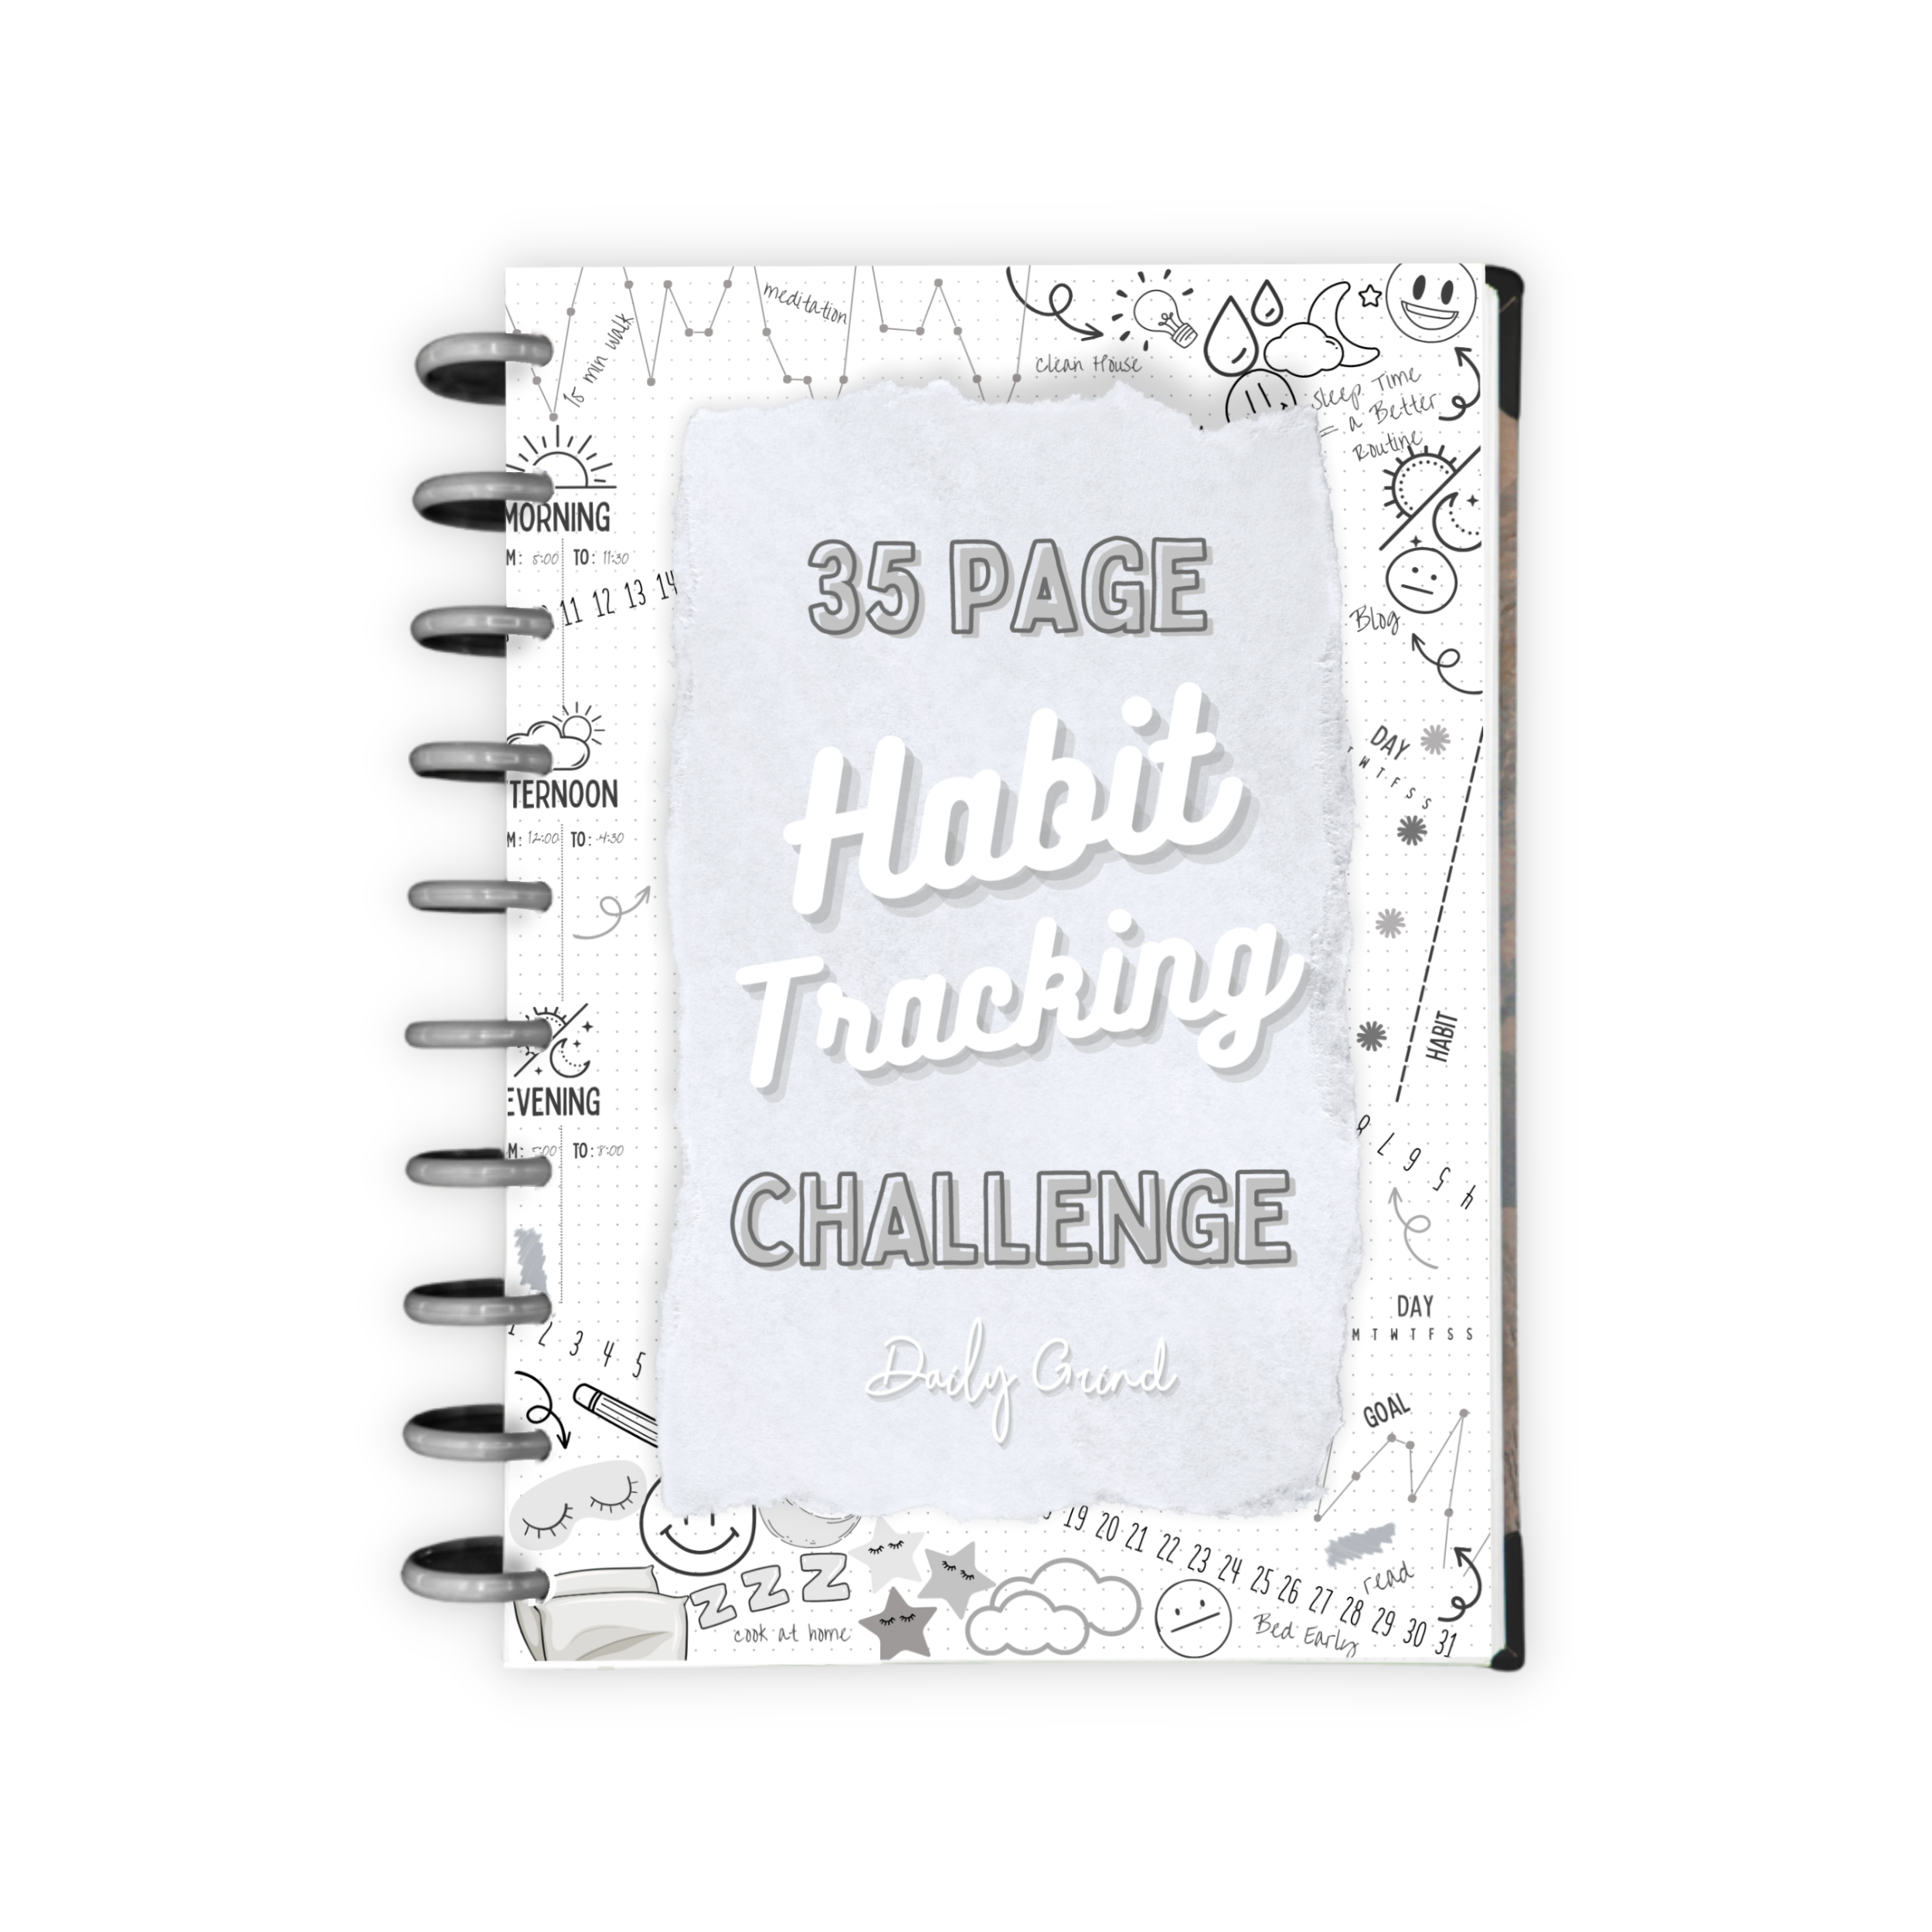 Habit Tracking Challenge - Insert